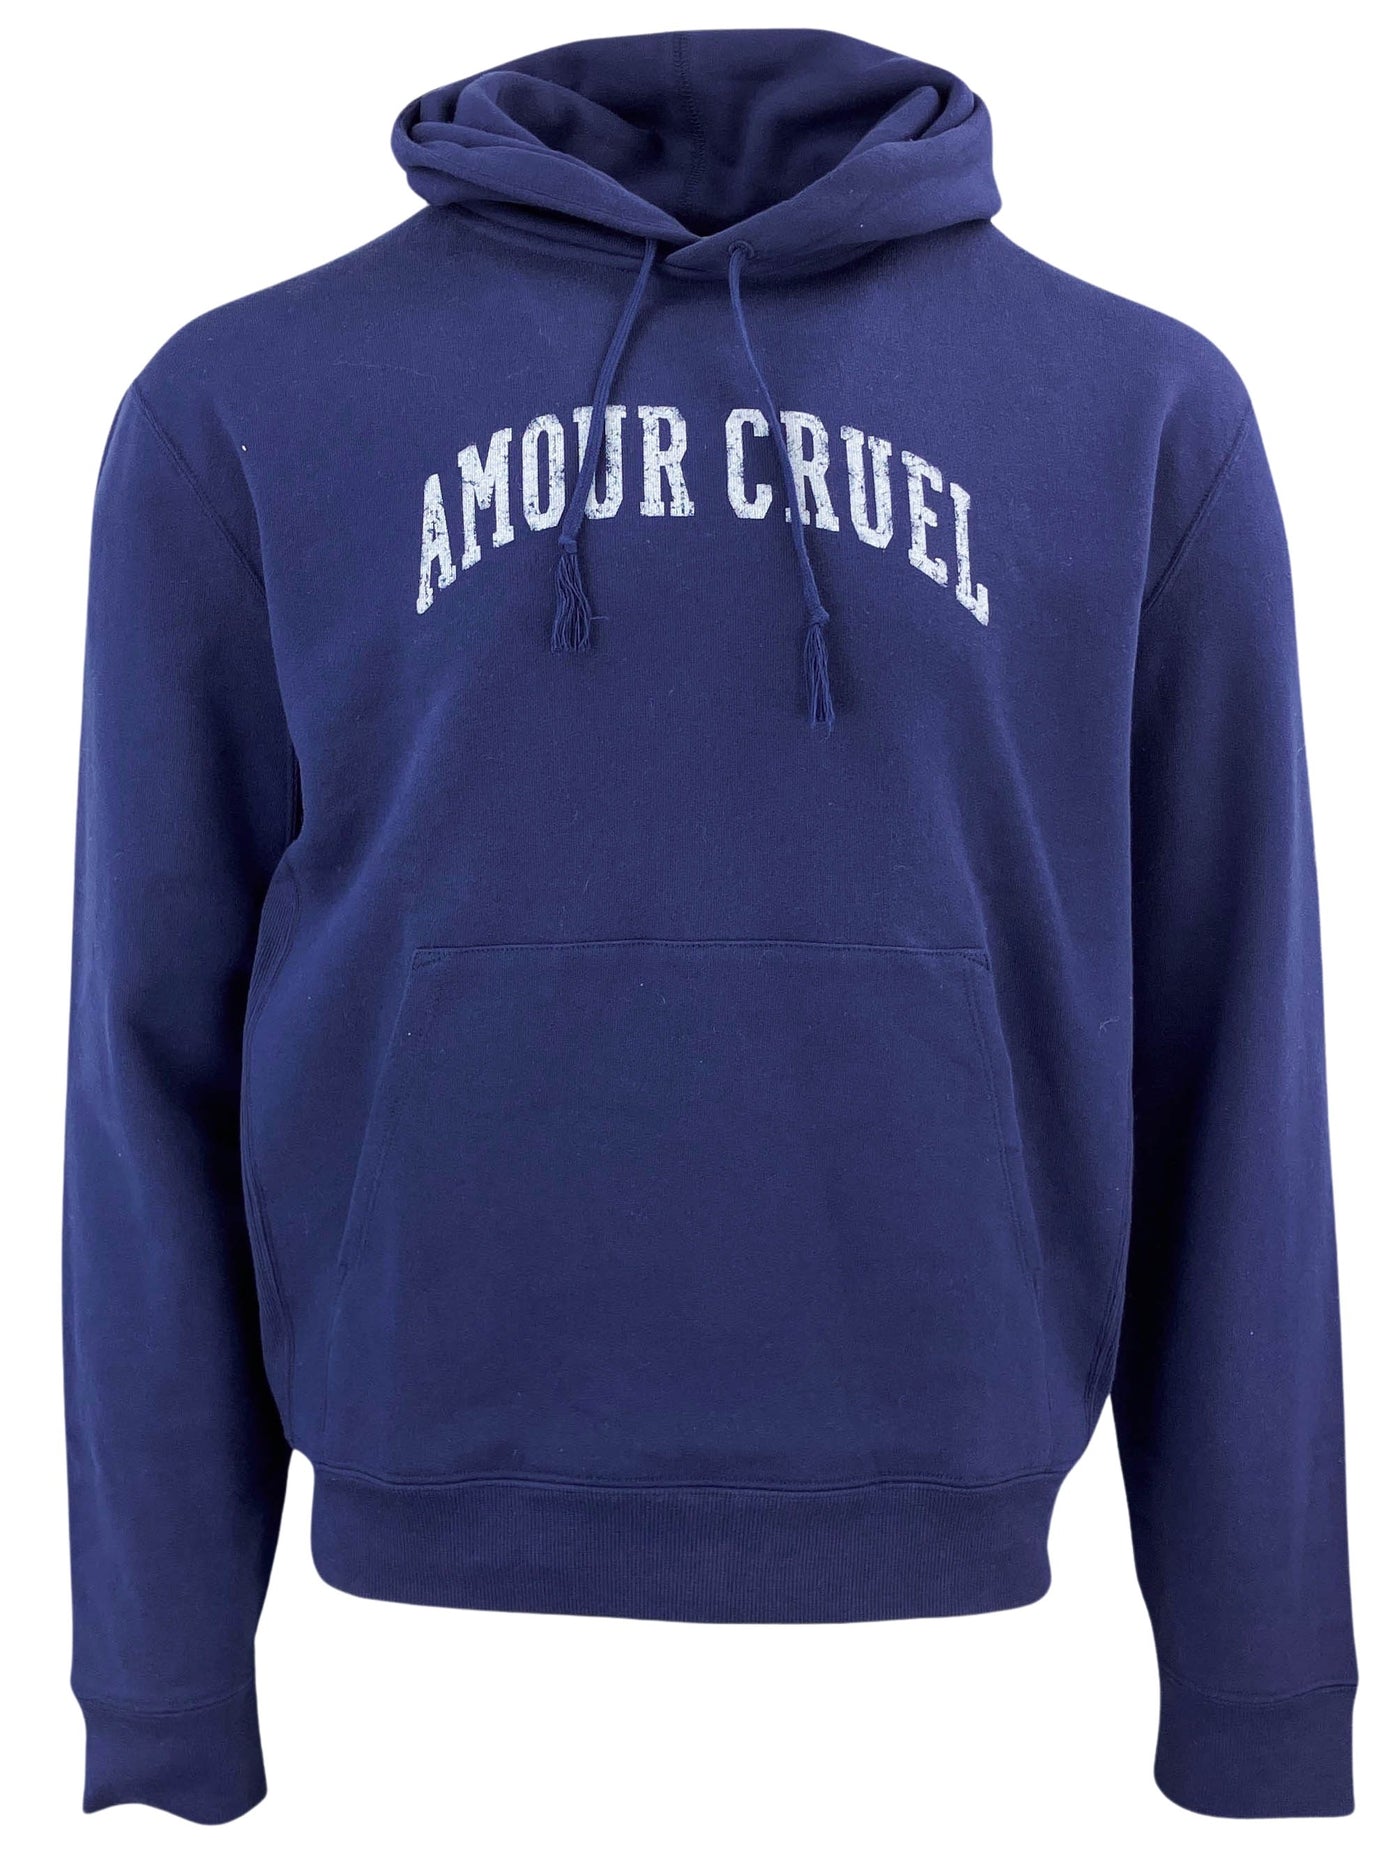 Saint Laurent Amour Cruel Hoodie in Blue - Discounts on Saint Laurent at UAL